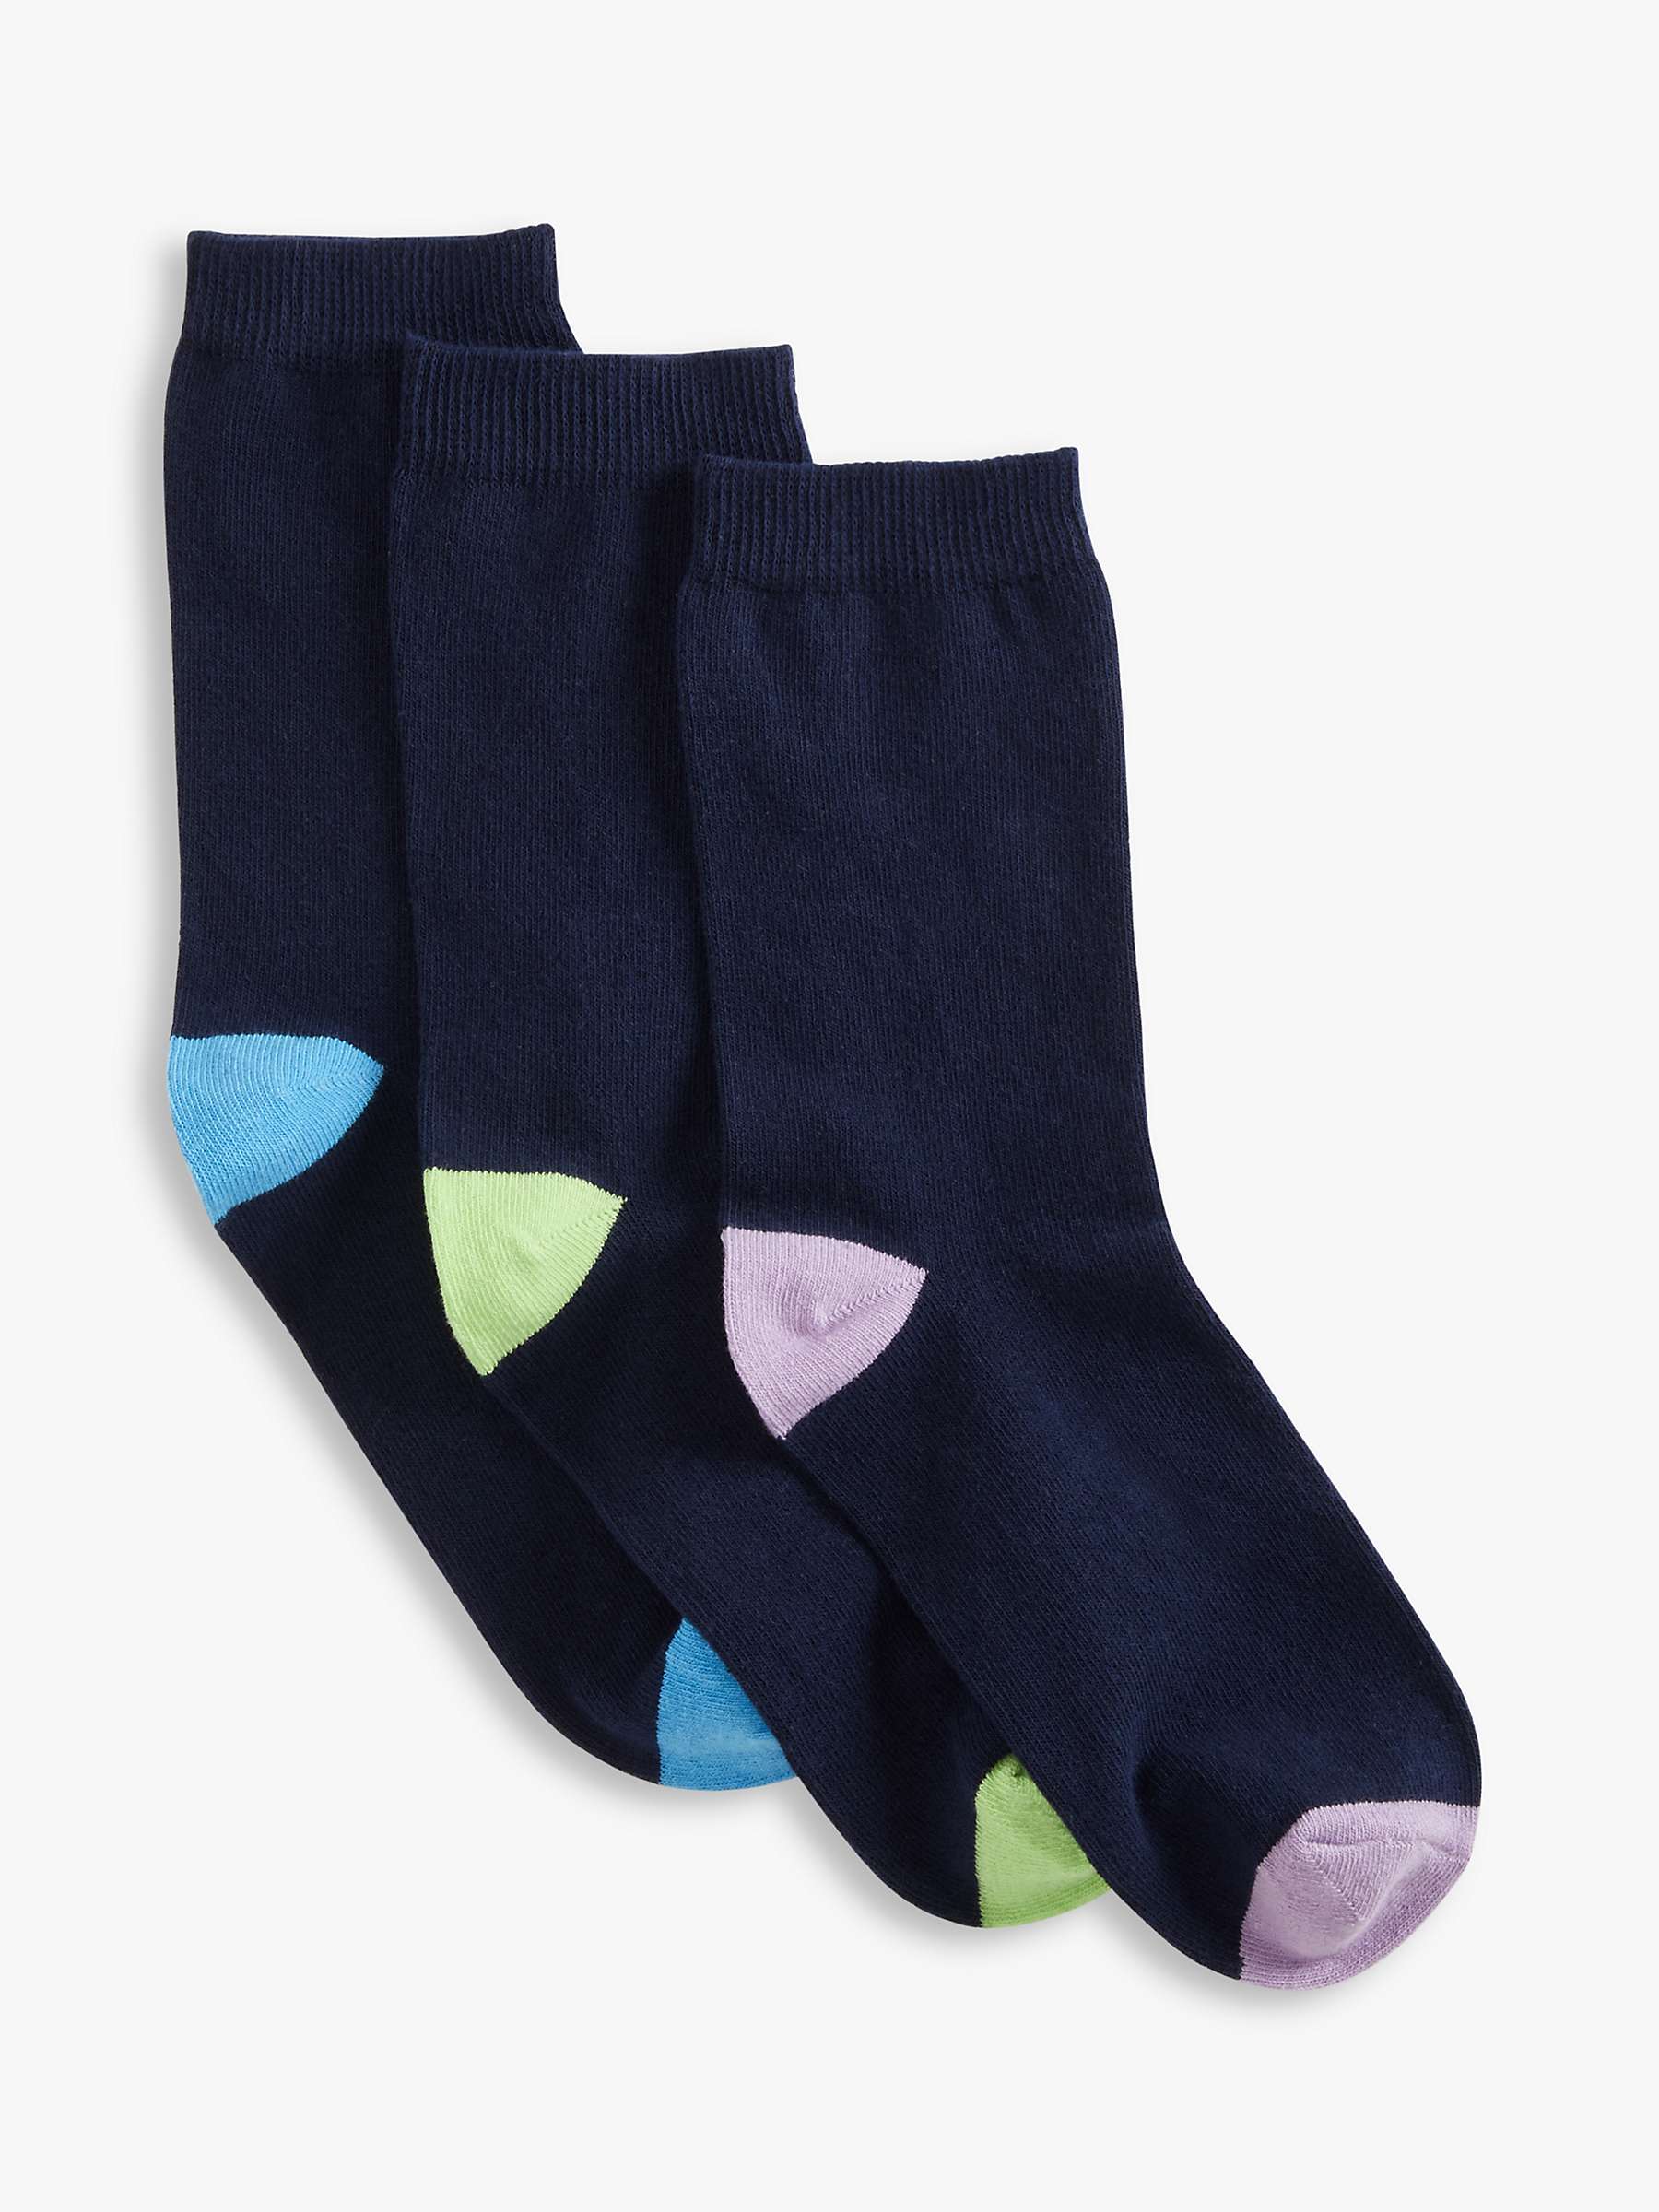 Buy John Lewis Heel and Toe Cotton Blend Socks, Pack of 3 Online at johnlewis.com